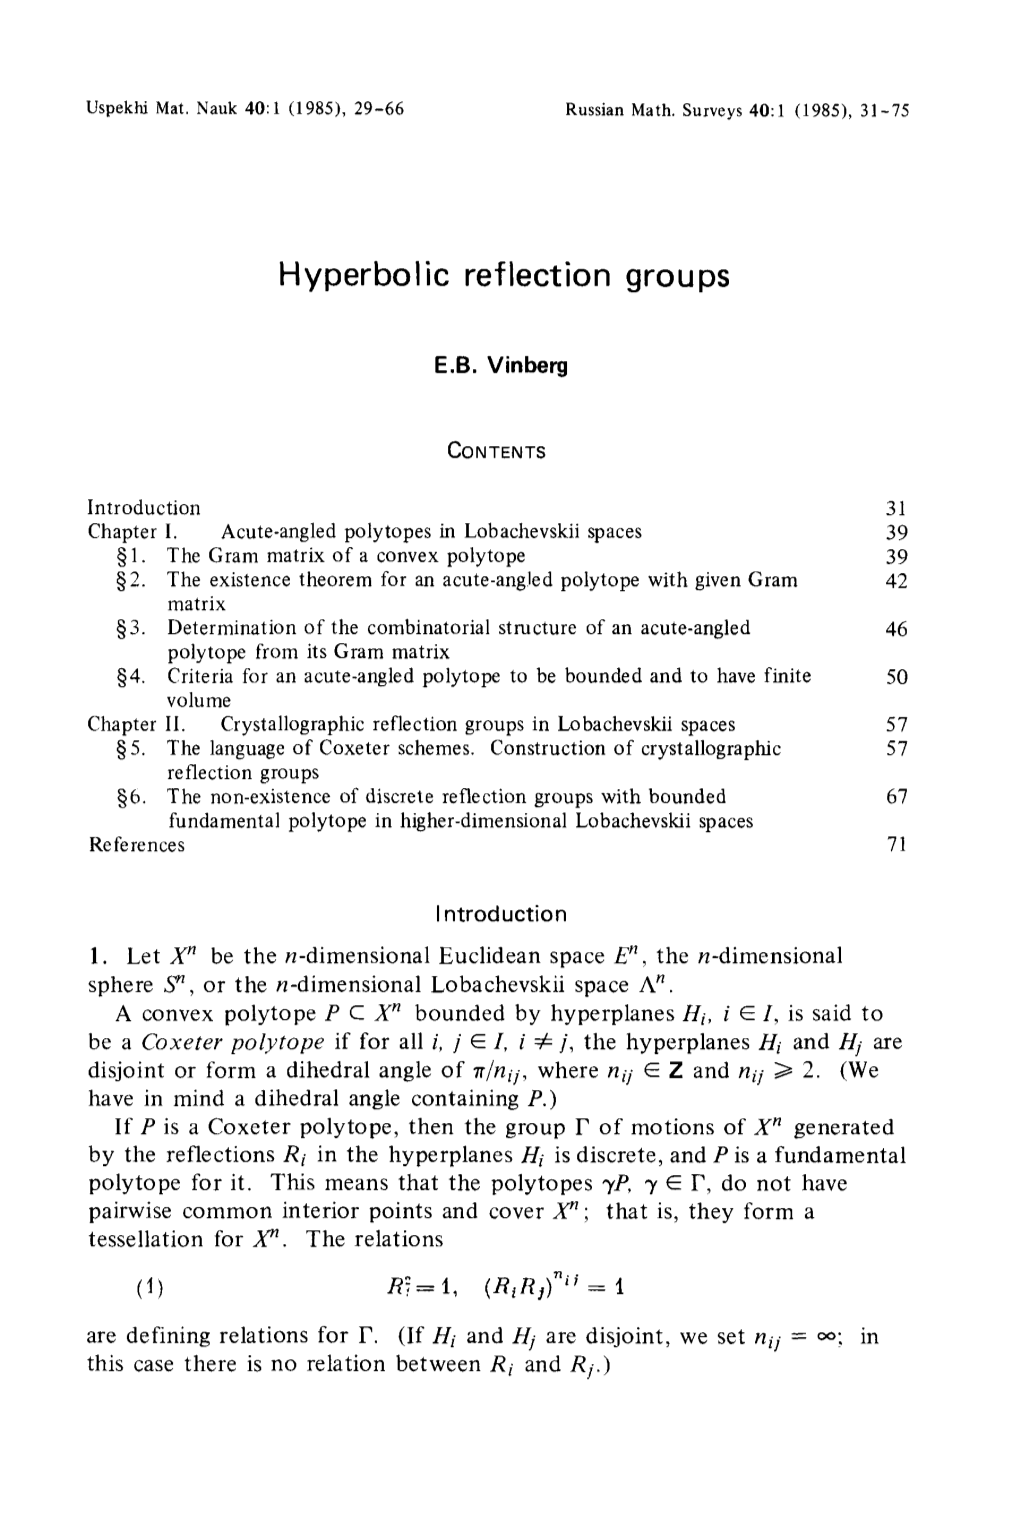 Hyperbolic Reflection Groups